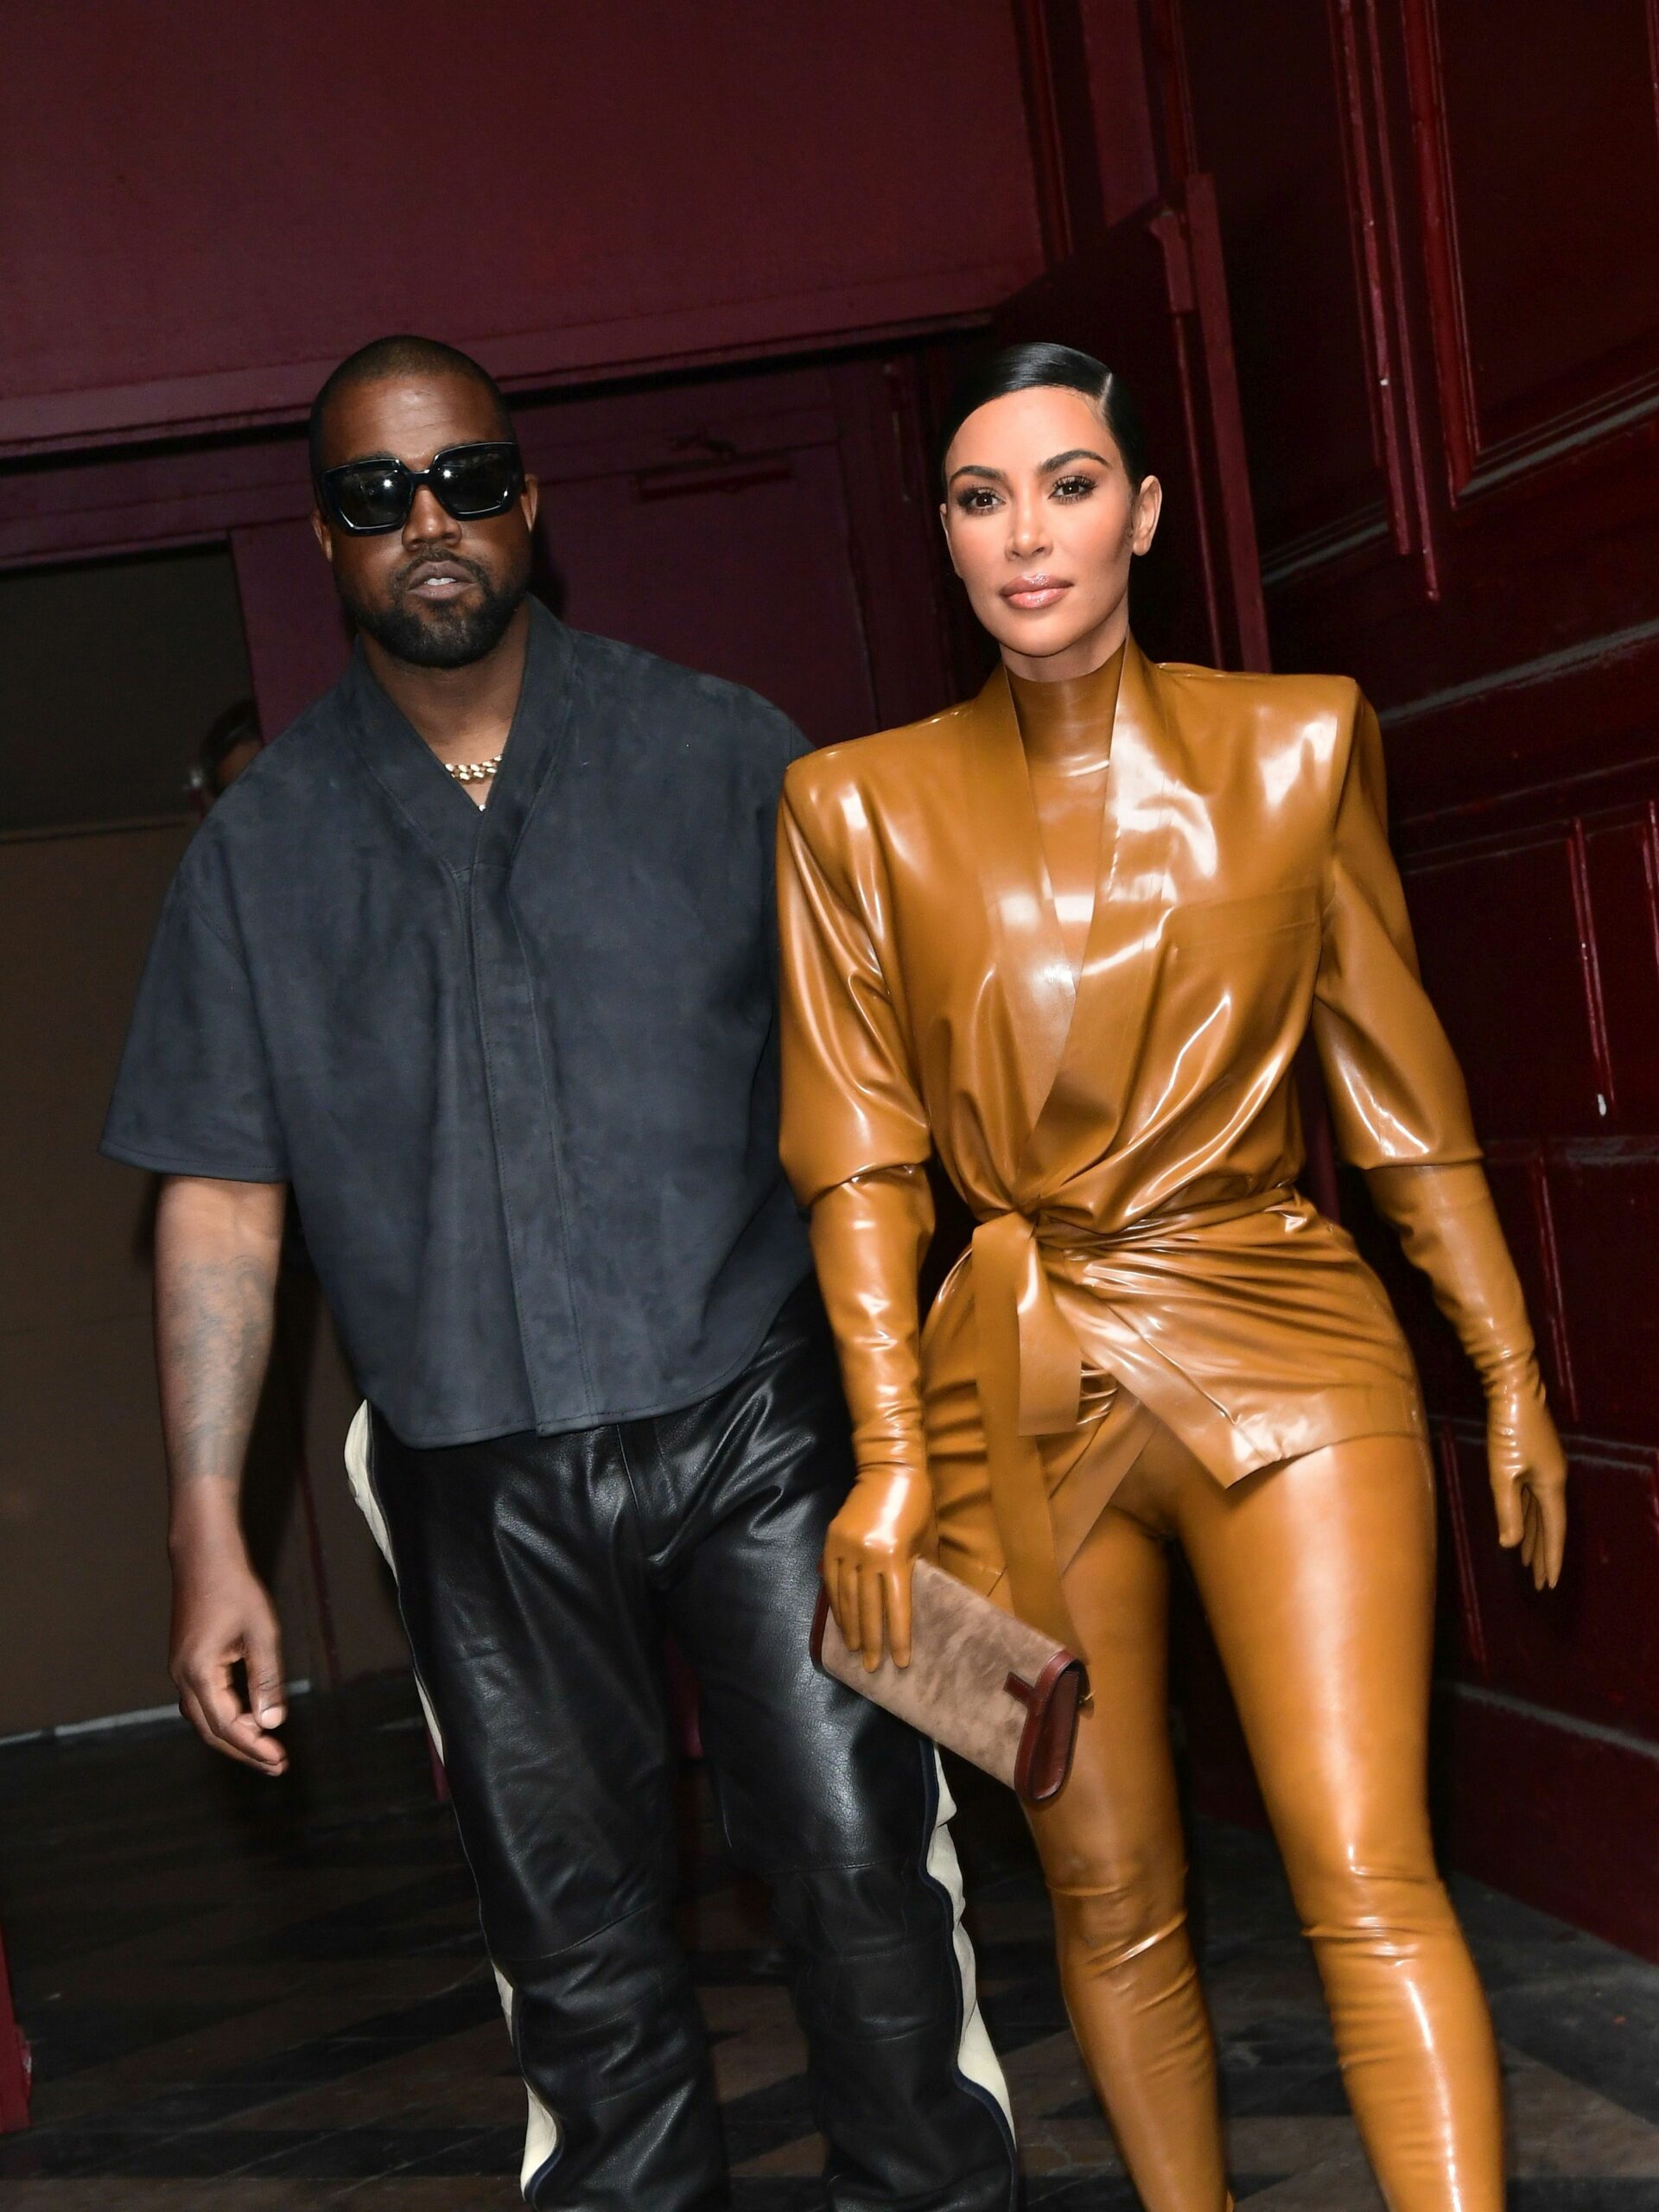 Meme this! Divorțul dintre Kim Kardashian și Kanye West, ținta glumelor în online. Merită un repost?